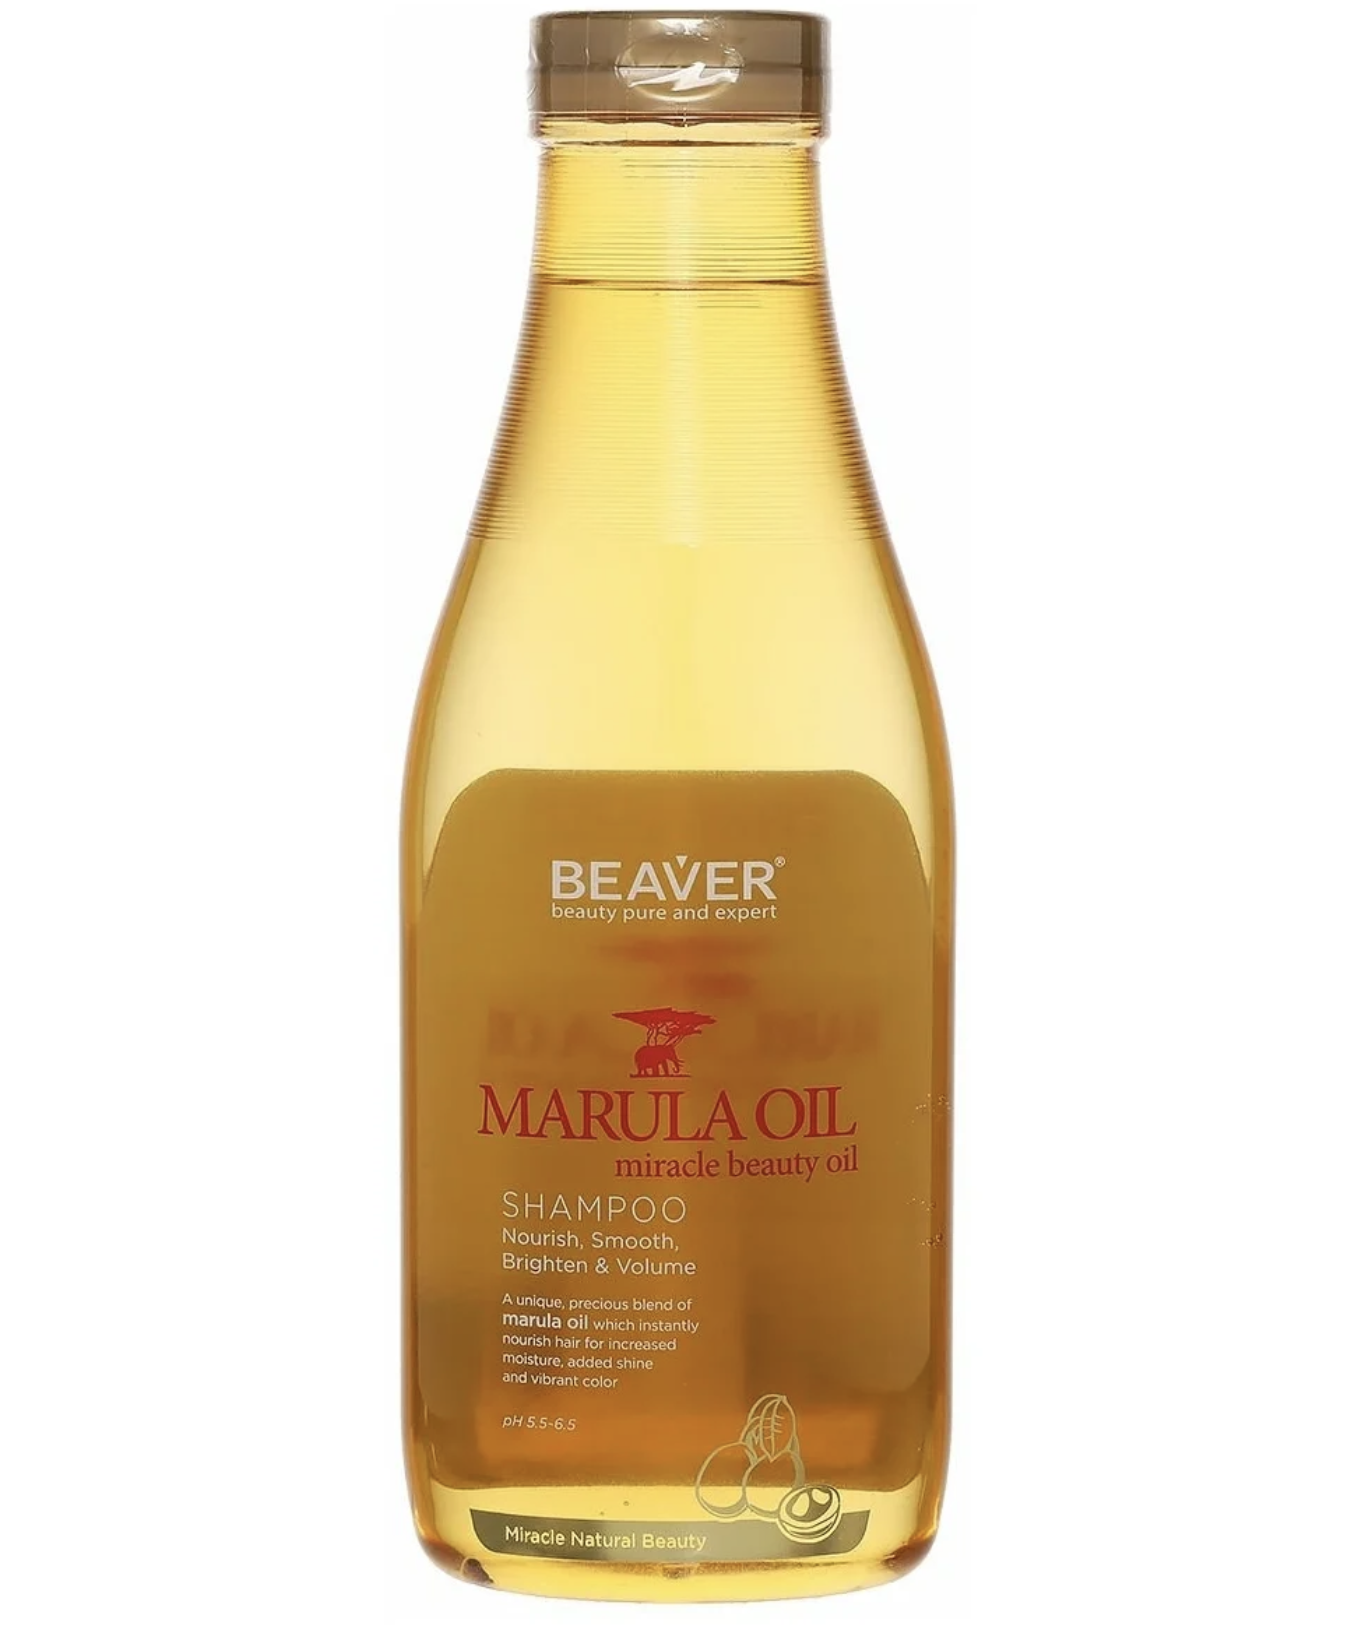   / Beaver -    Marula Oil Beauty oil shampoo 60 